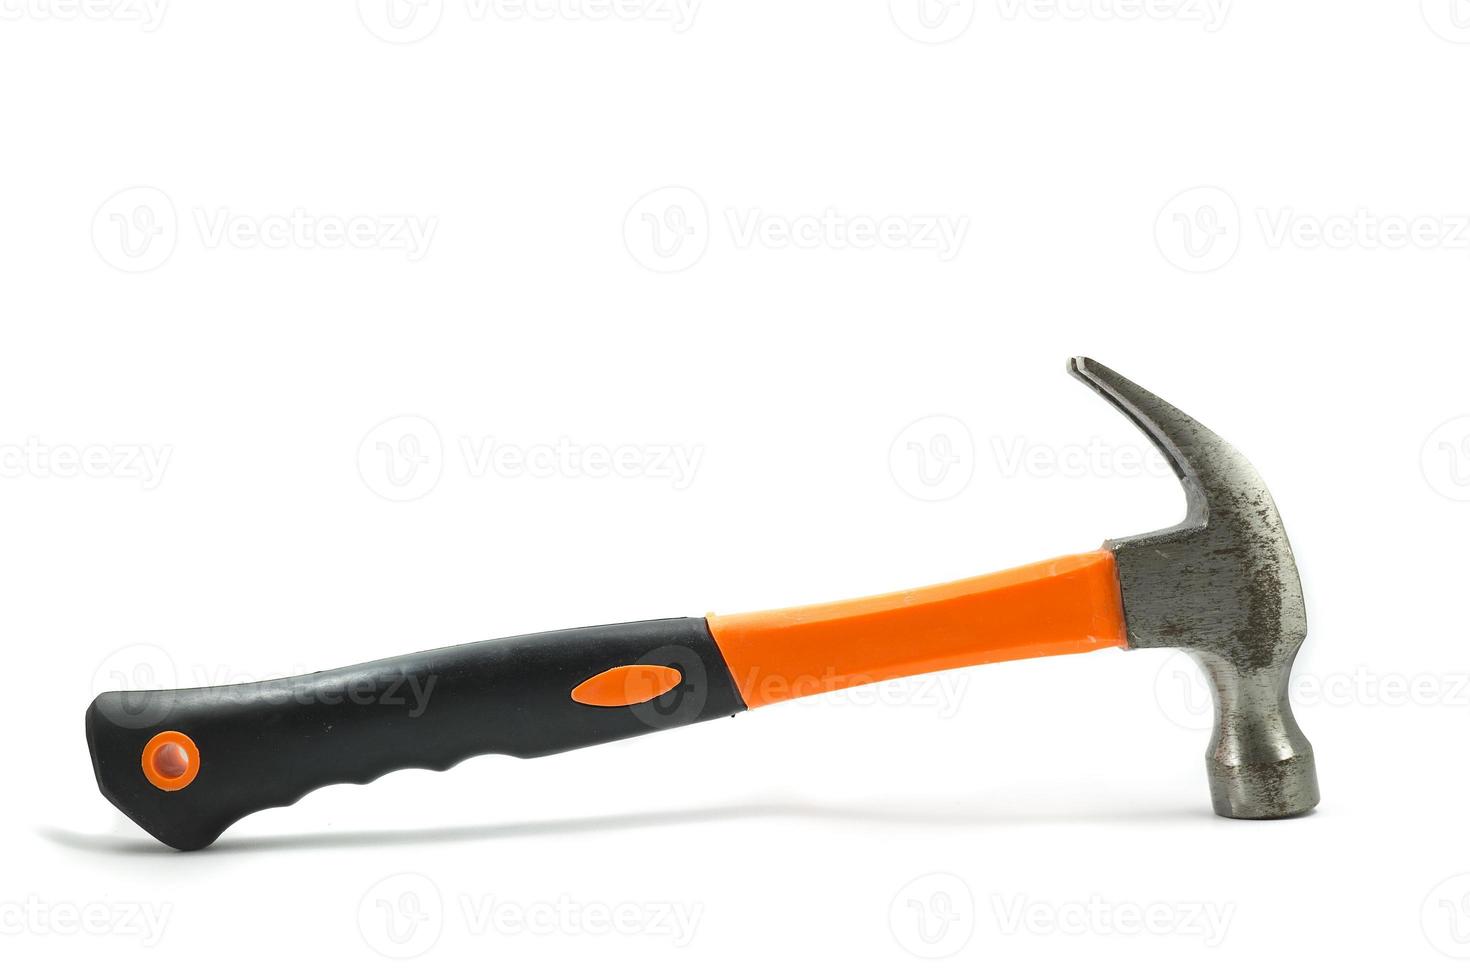 martelo com cabo laranja e preto isolado no branco foto